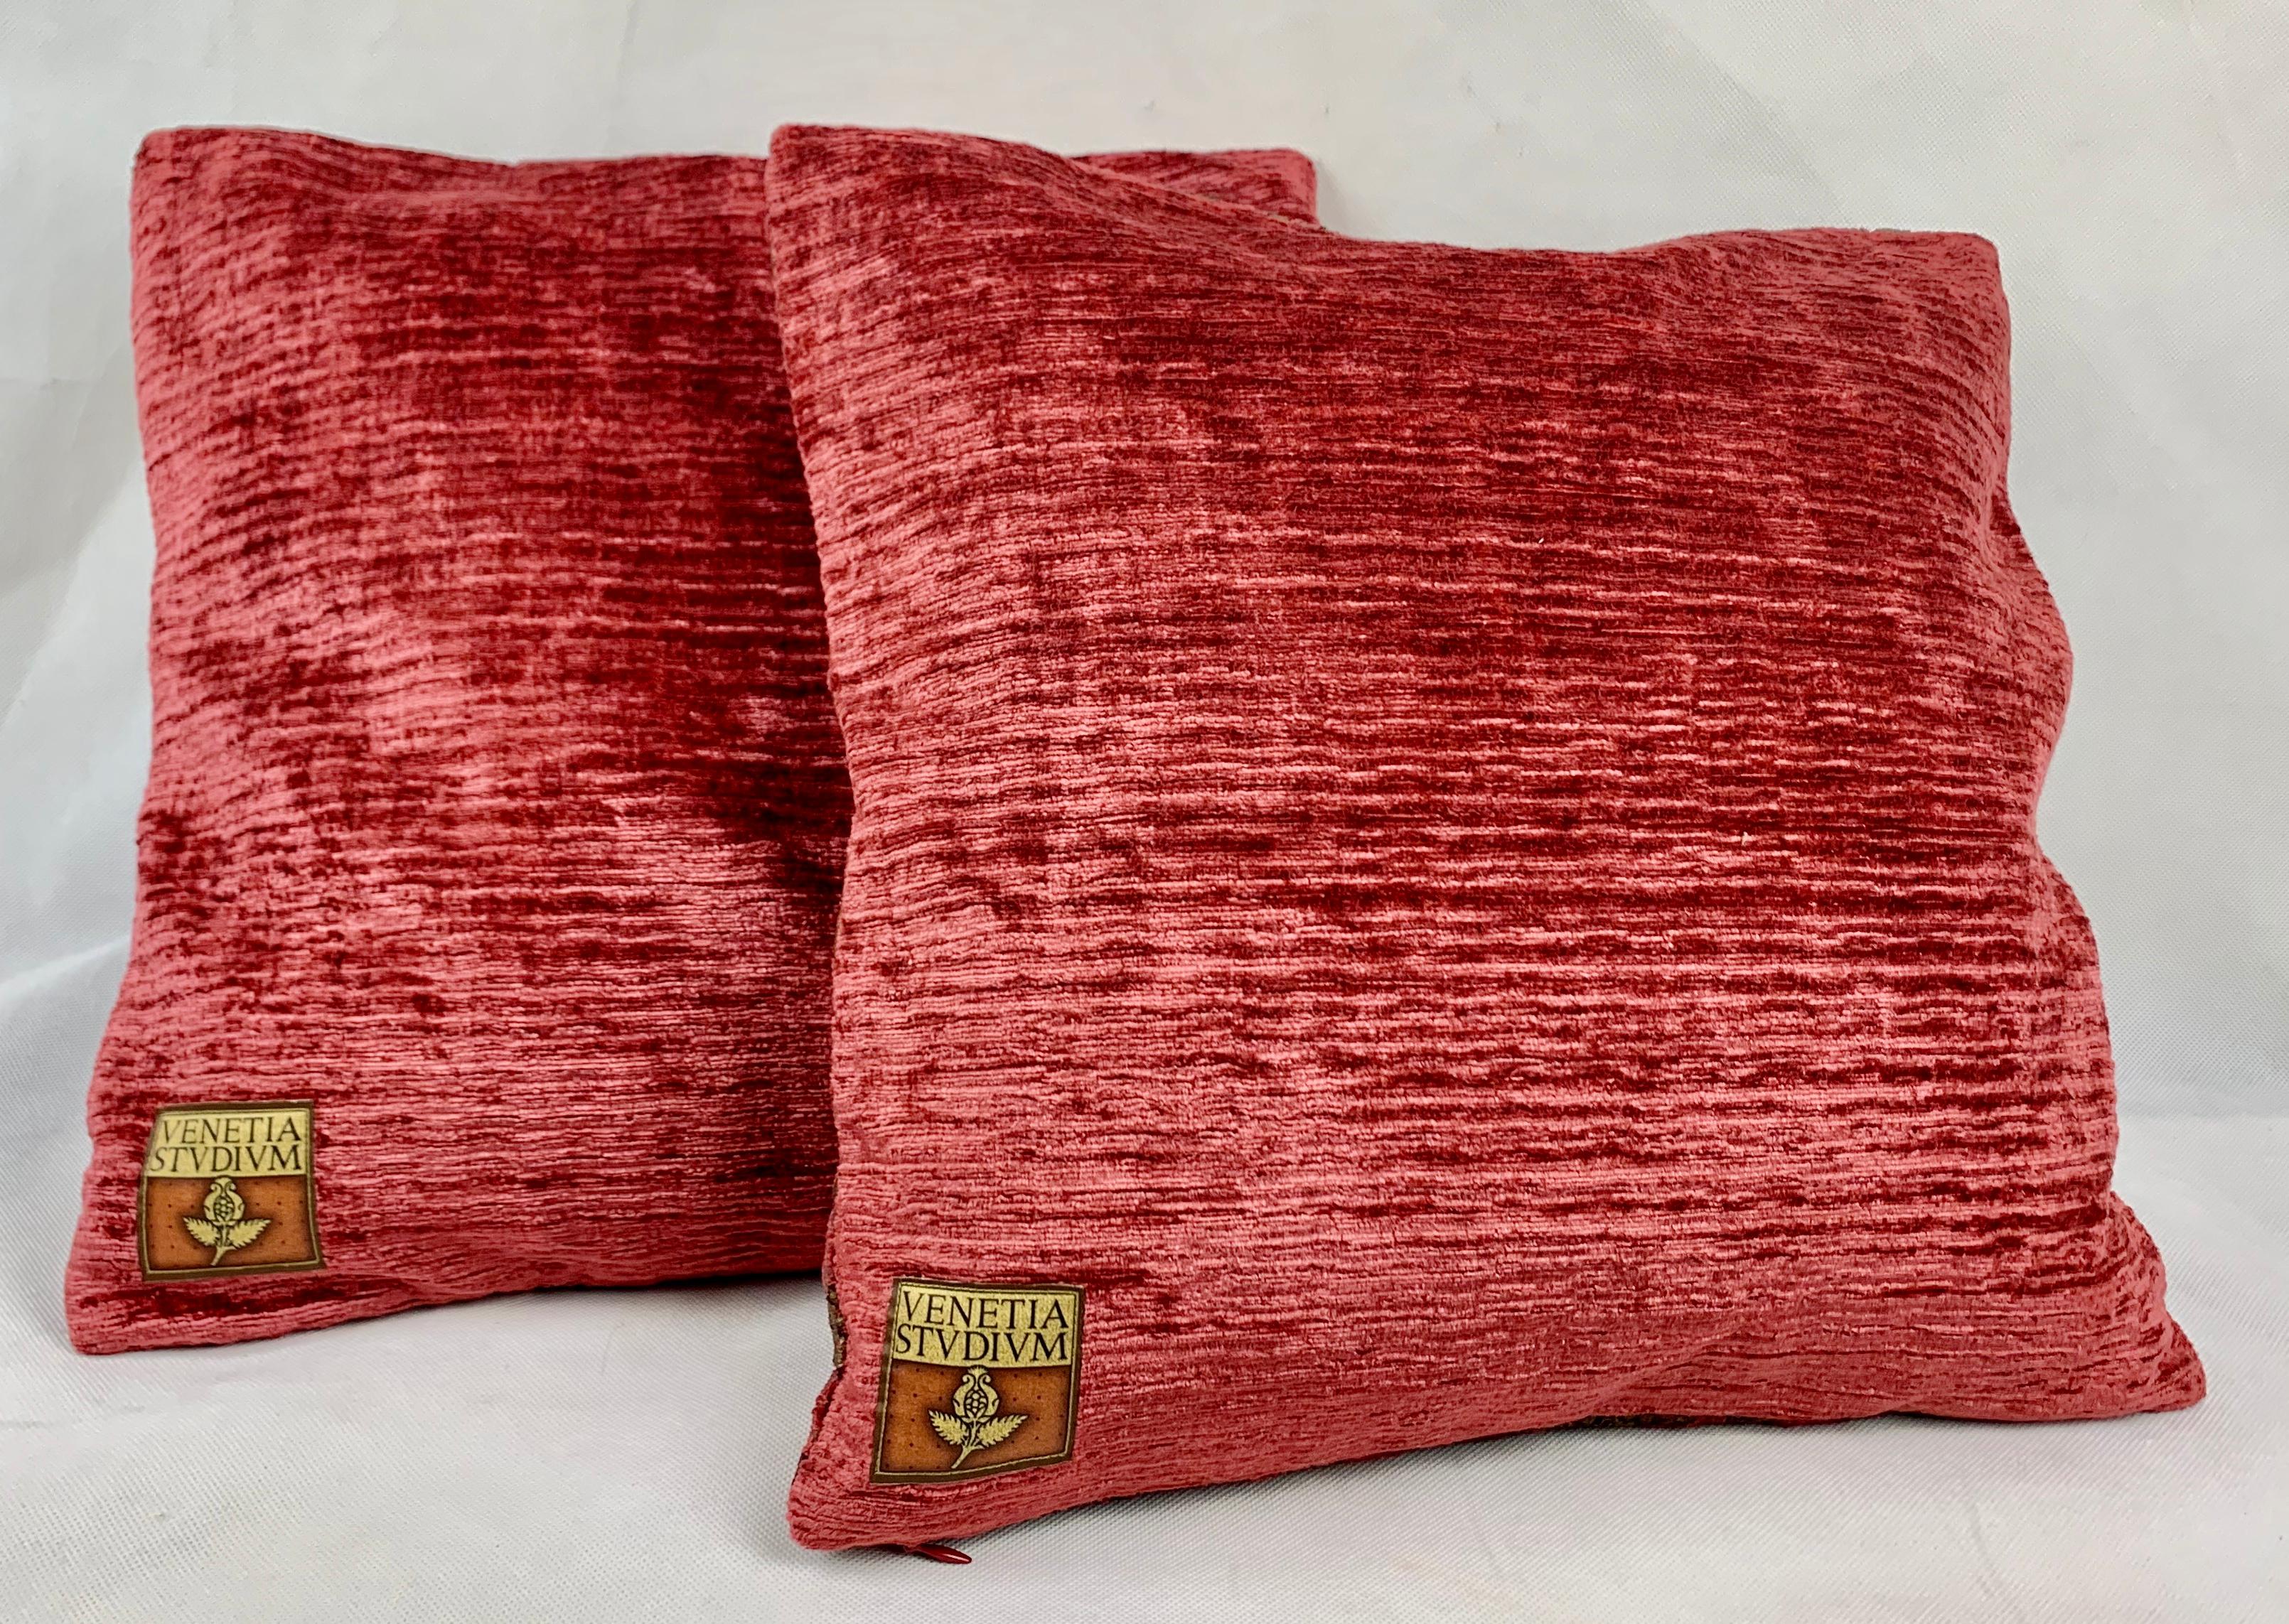 Italian Fortuny/Venetia Studium Square Velvet Cushions. The Bizarre Pattern